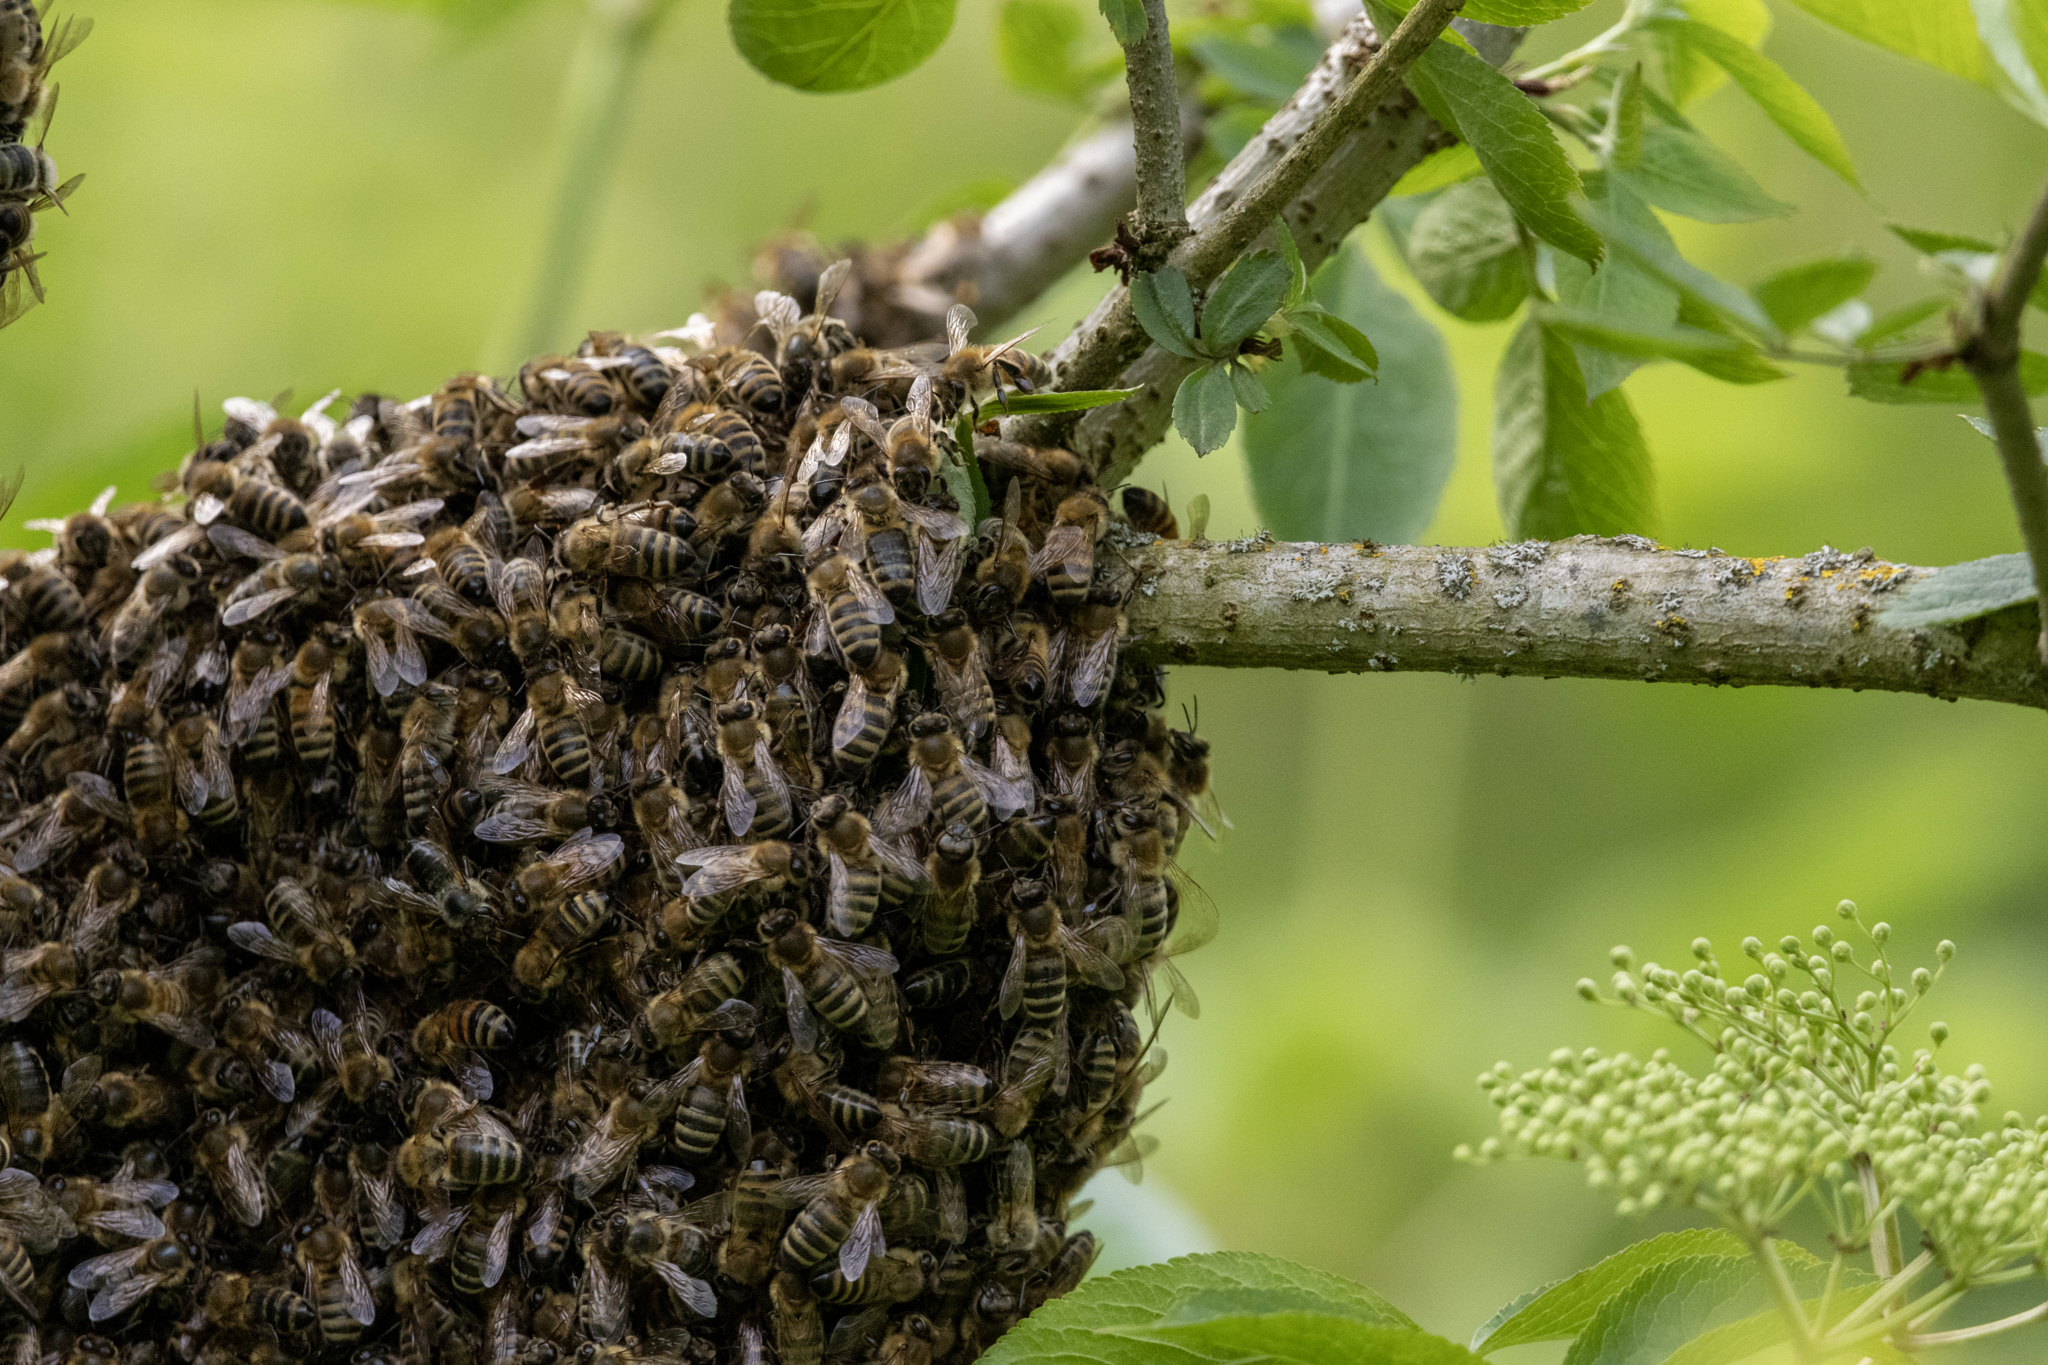 Western honey bee - Wikipedia